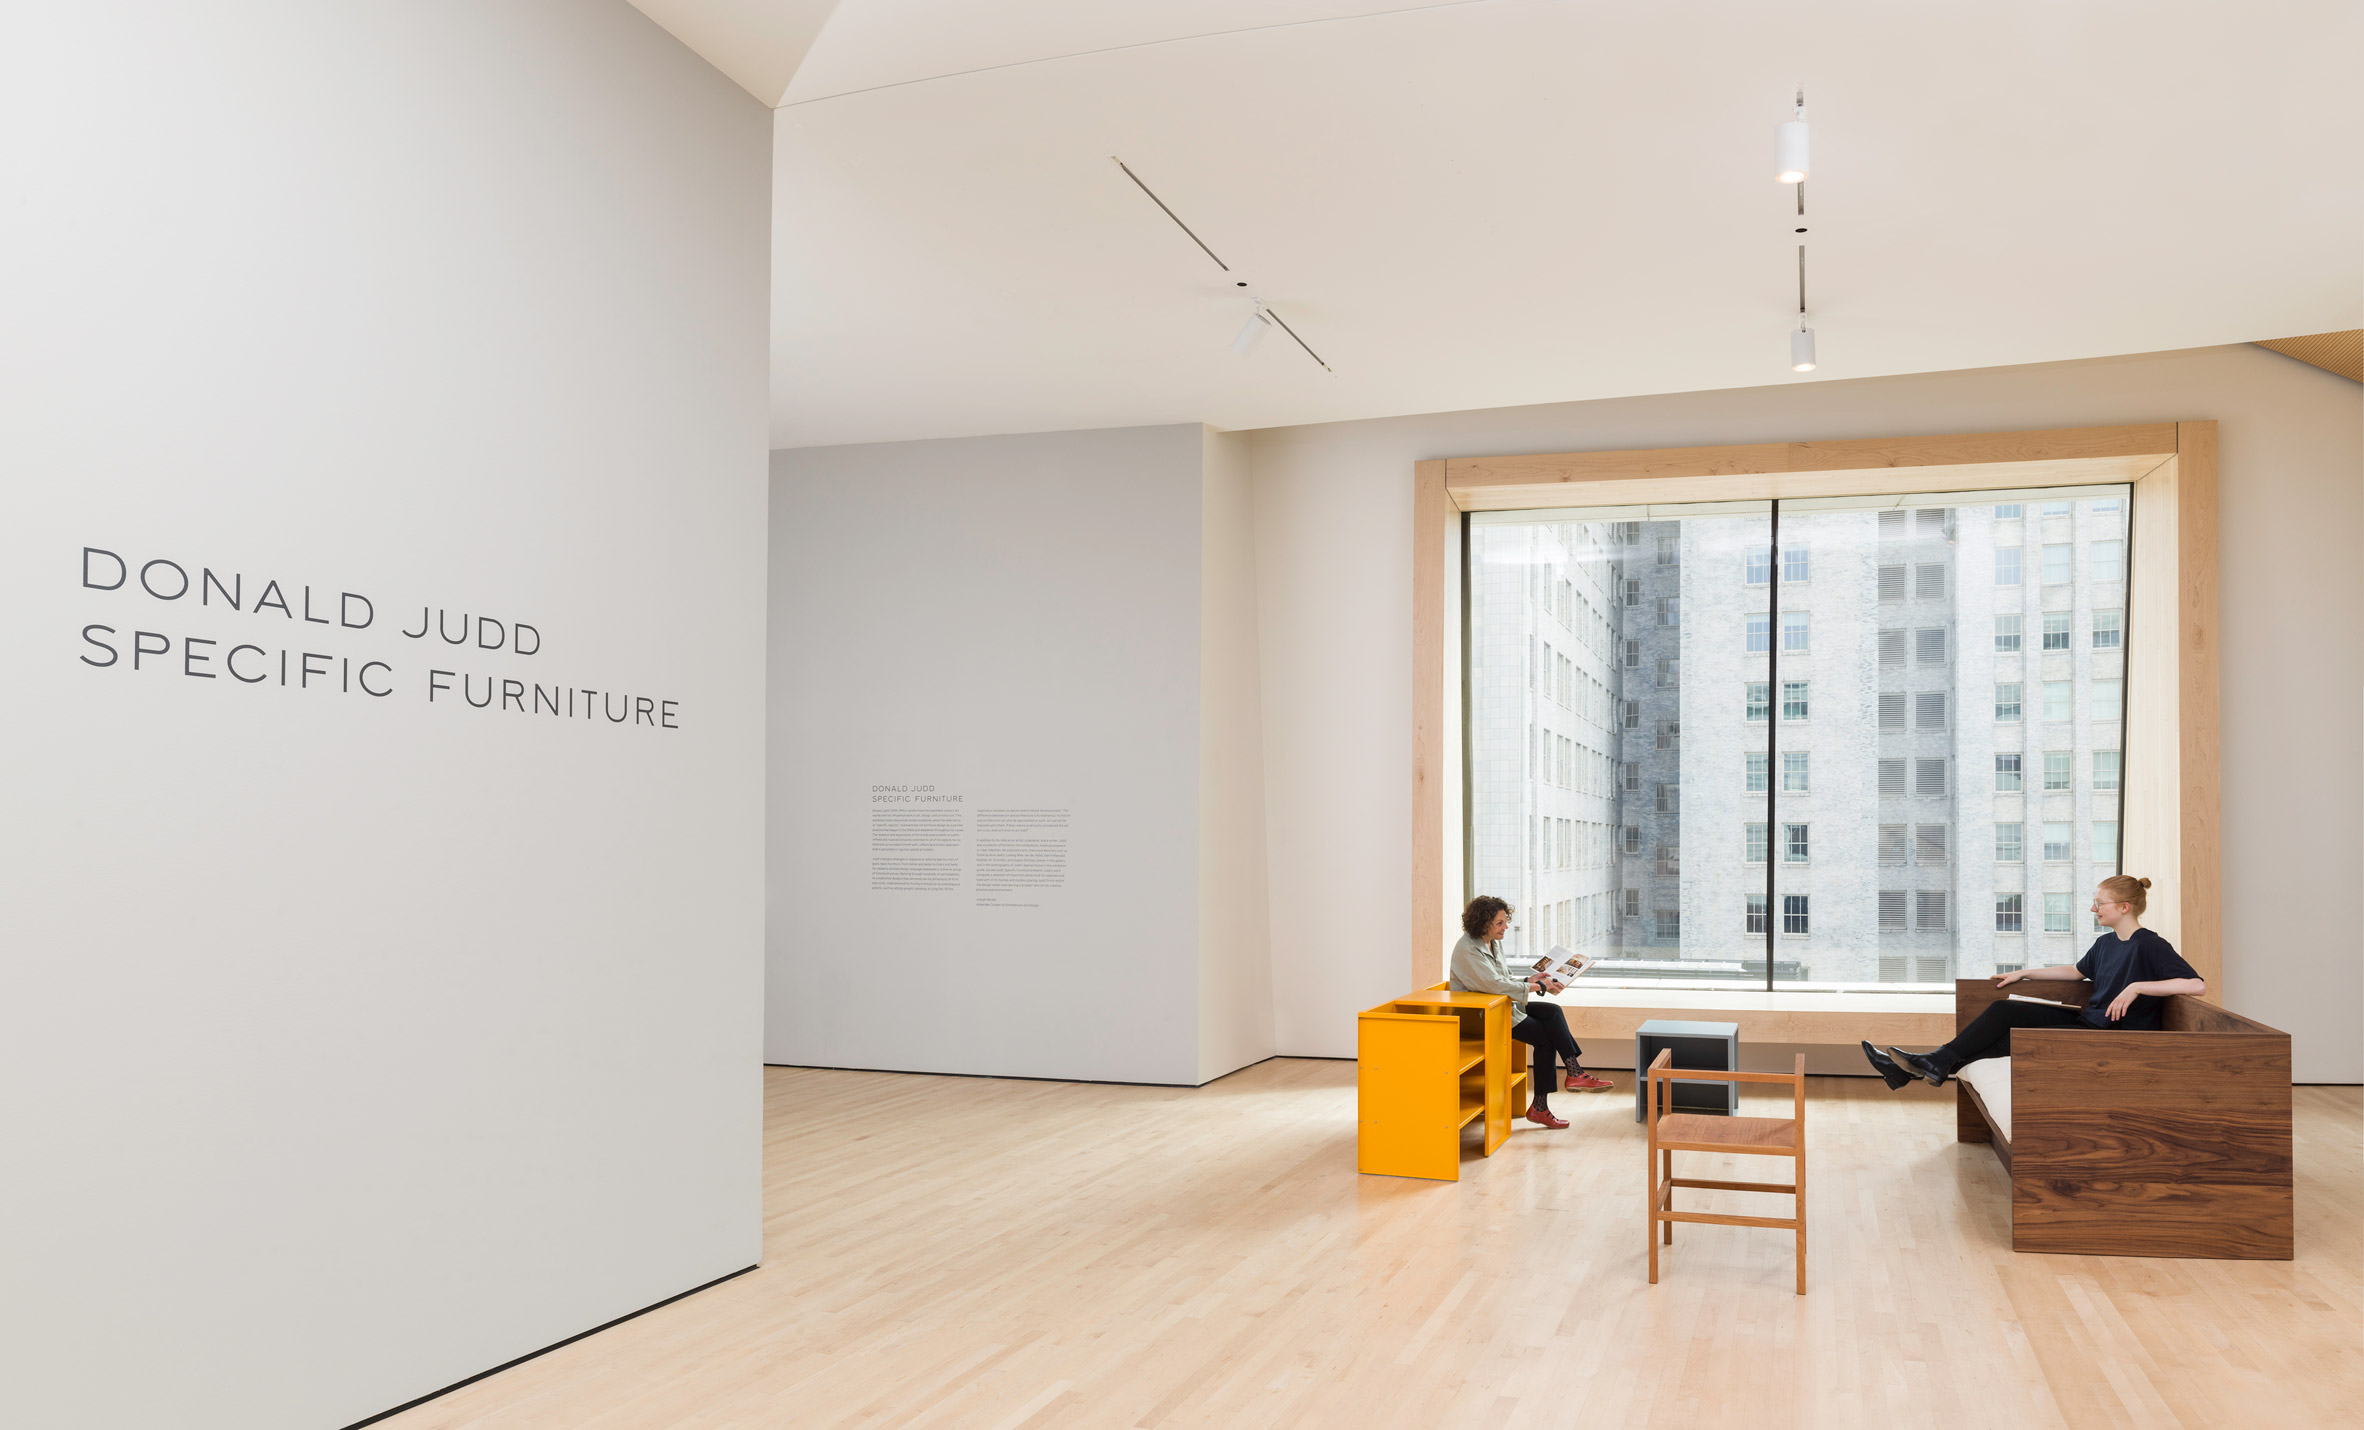 SFMOMA showcases Donald Judd's minimal furniture